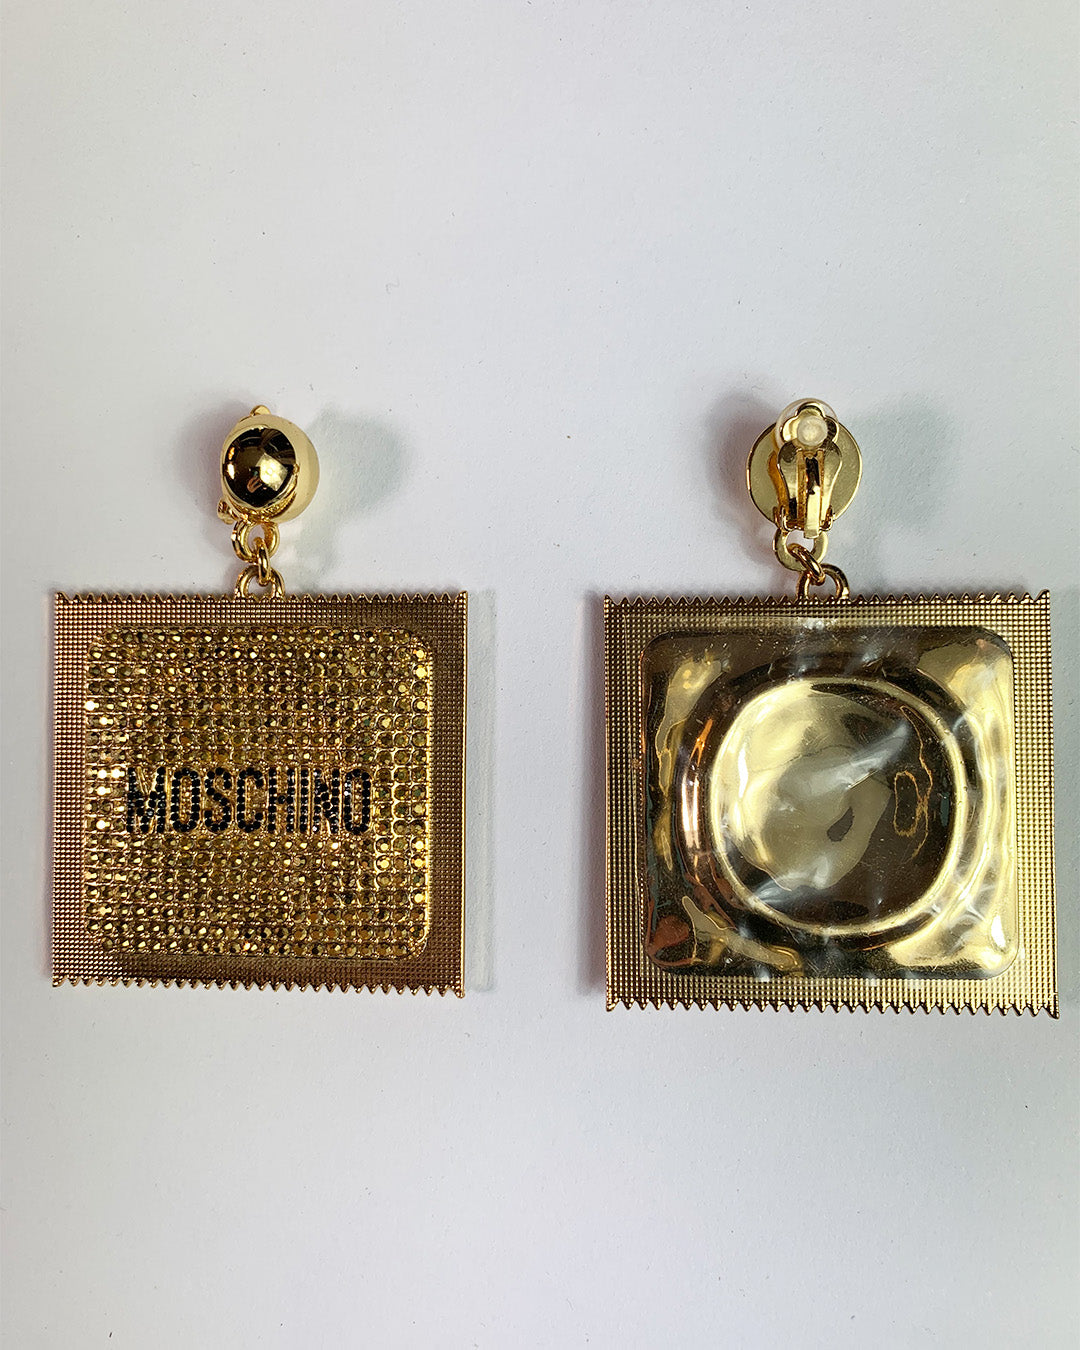 MOSCHINO X H&M Condom Earrings